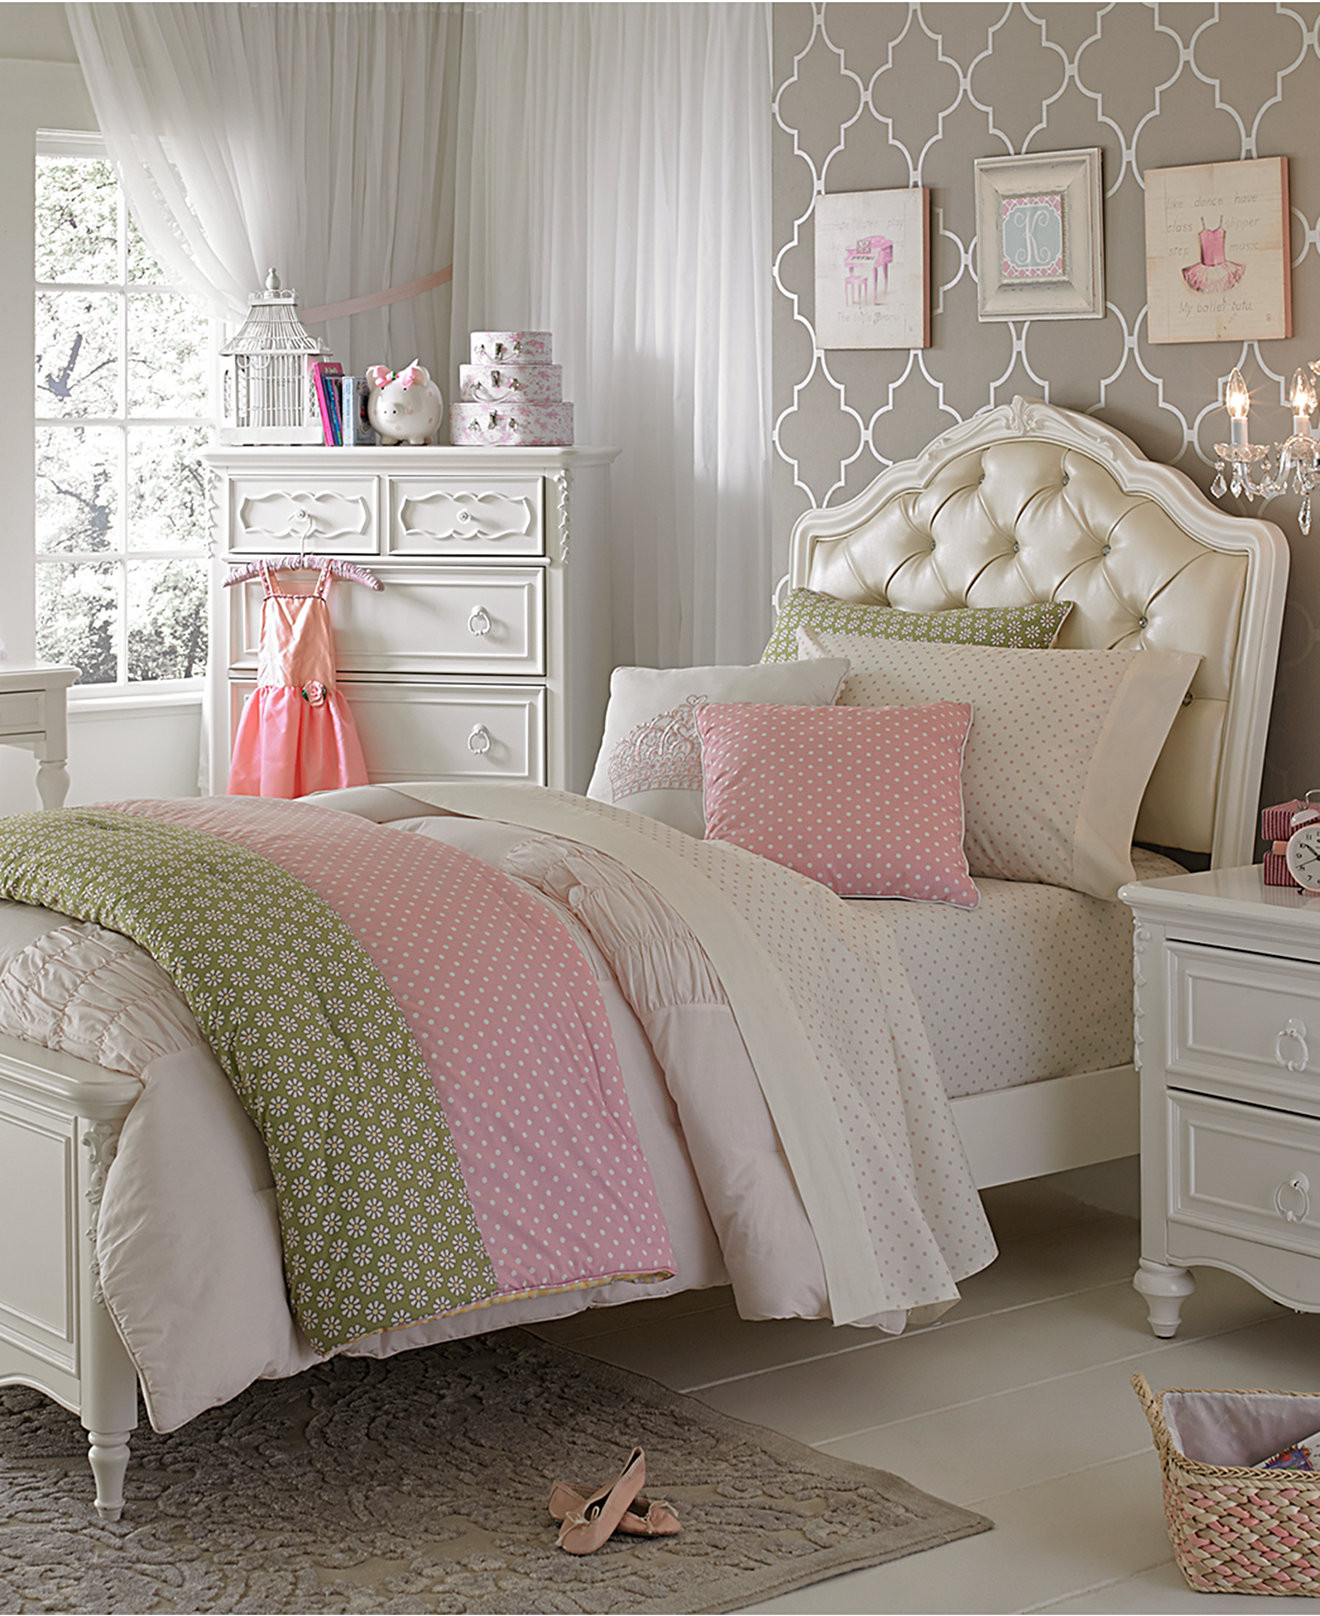 Girls Bedroom Furniture Sets
 25 Romantic and Modern Ideas for Girls Bedroom Sets